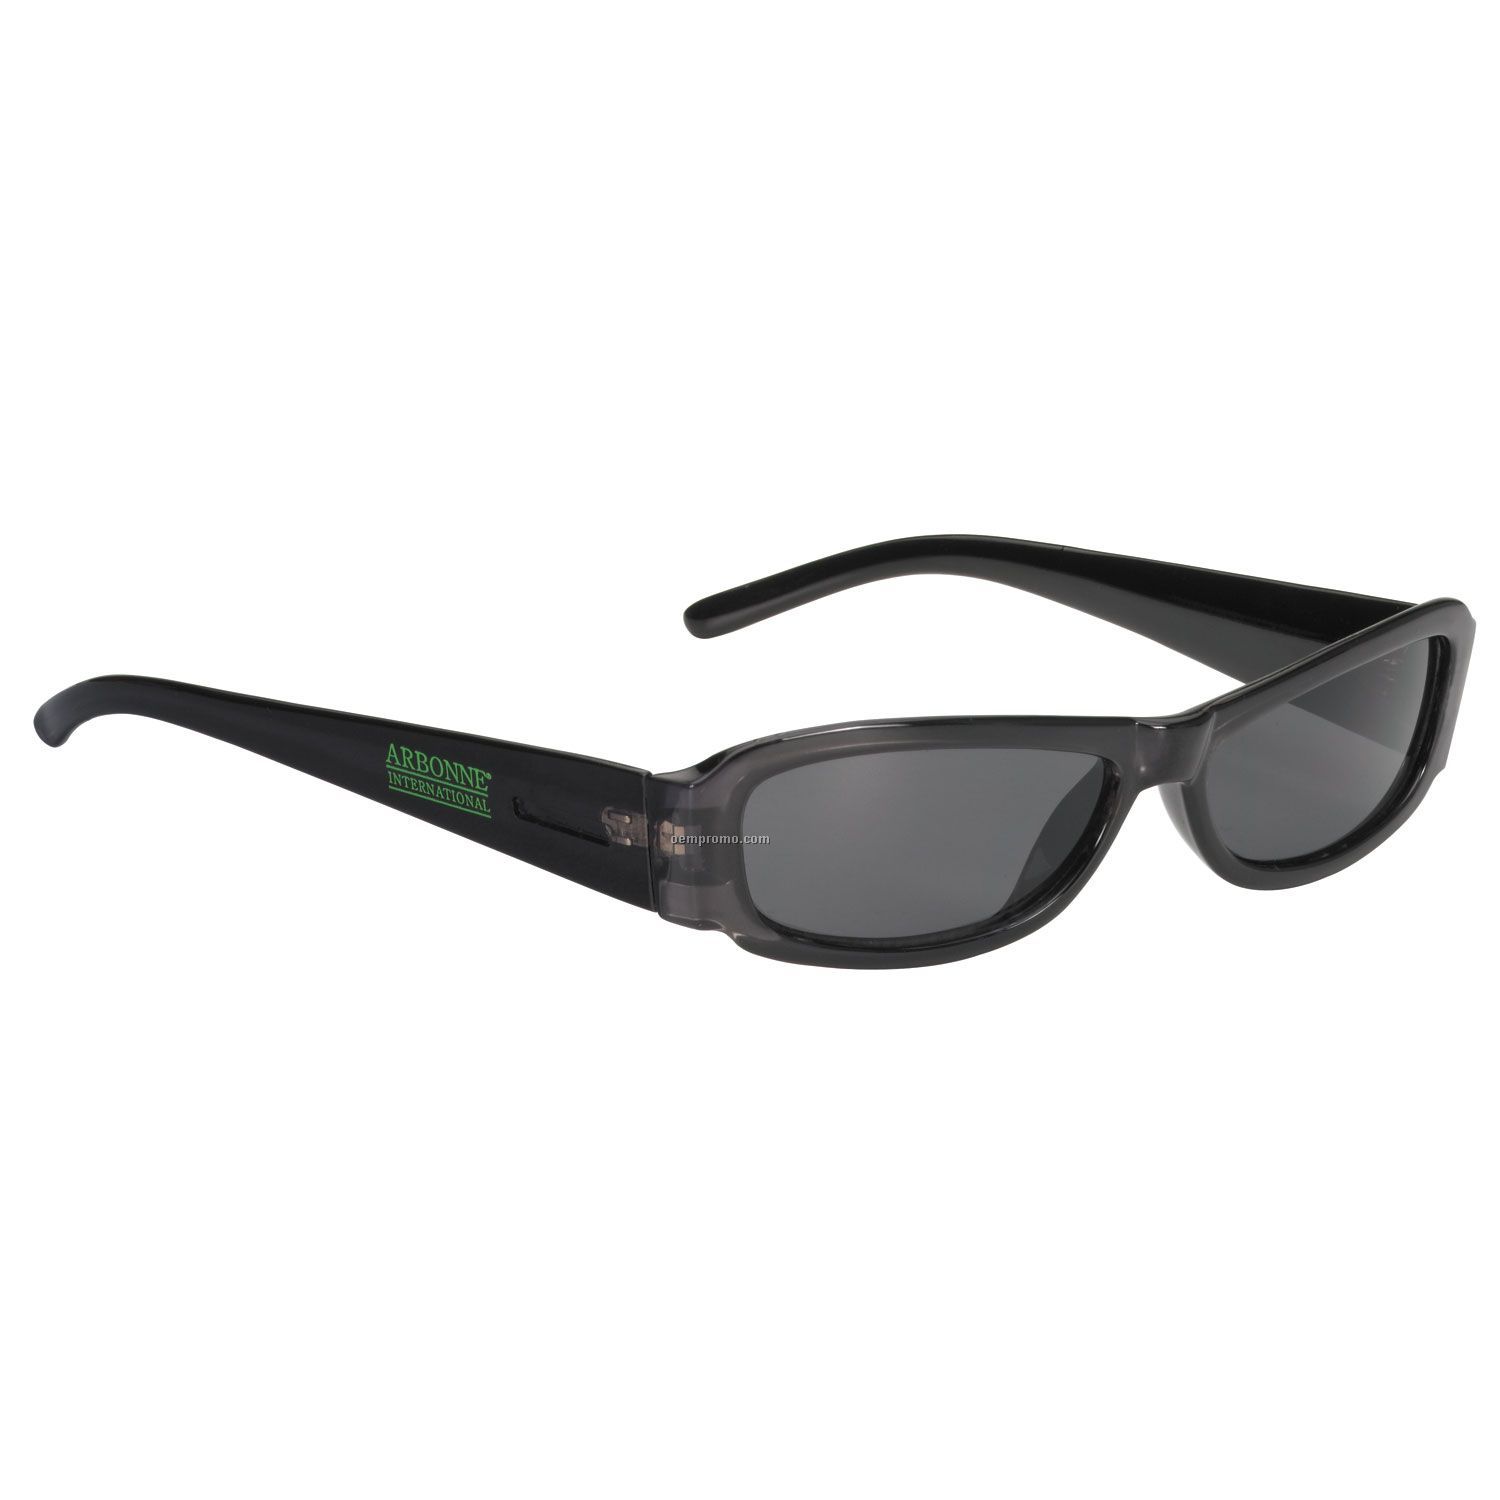 Newport Sleek Black Frame Sunglasses W/ Smoke Gray Lens